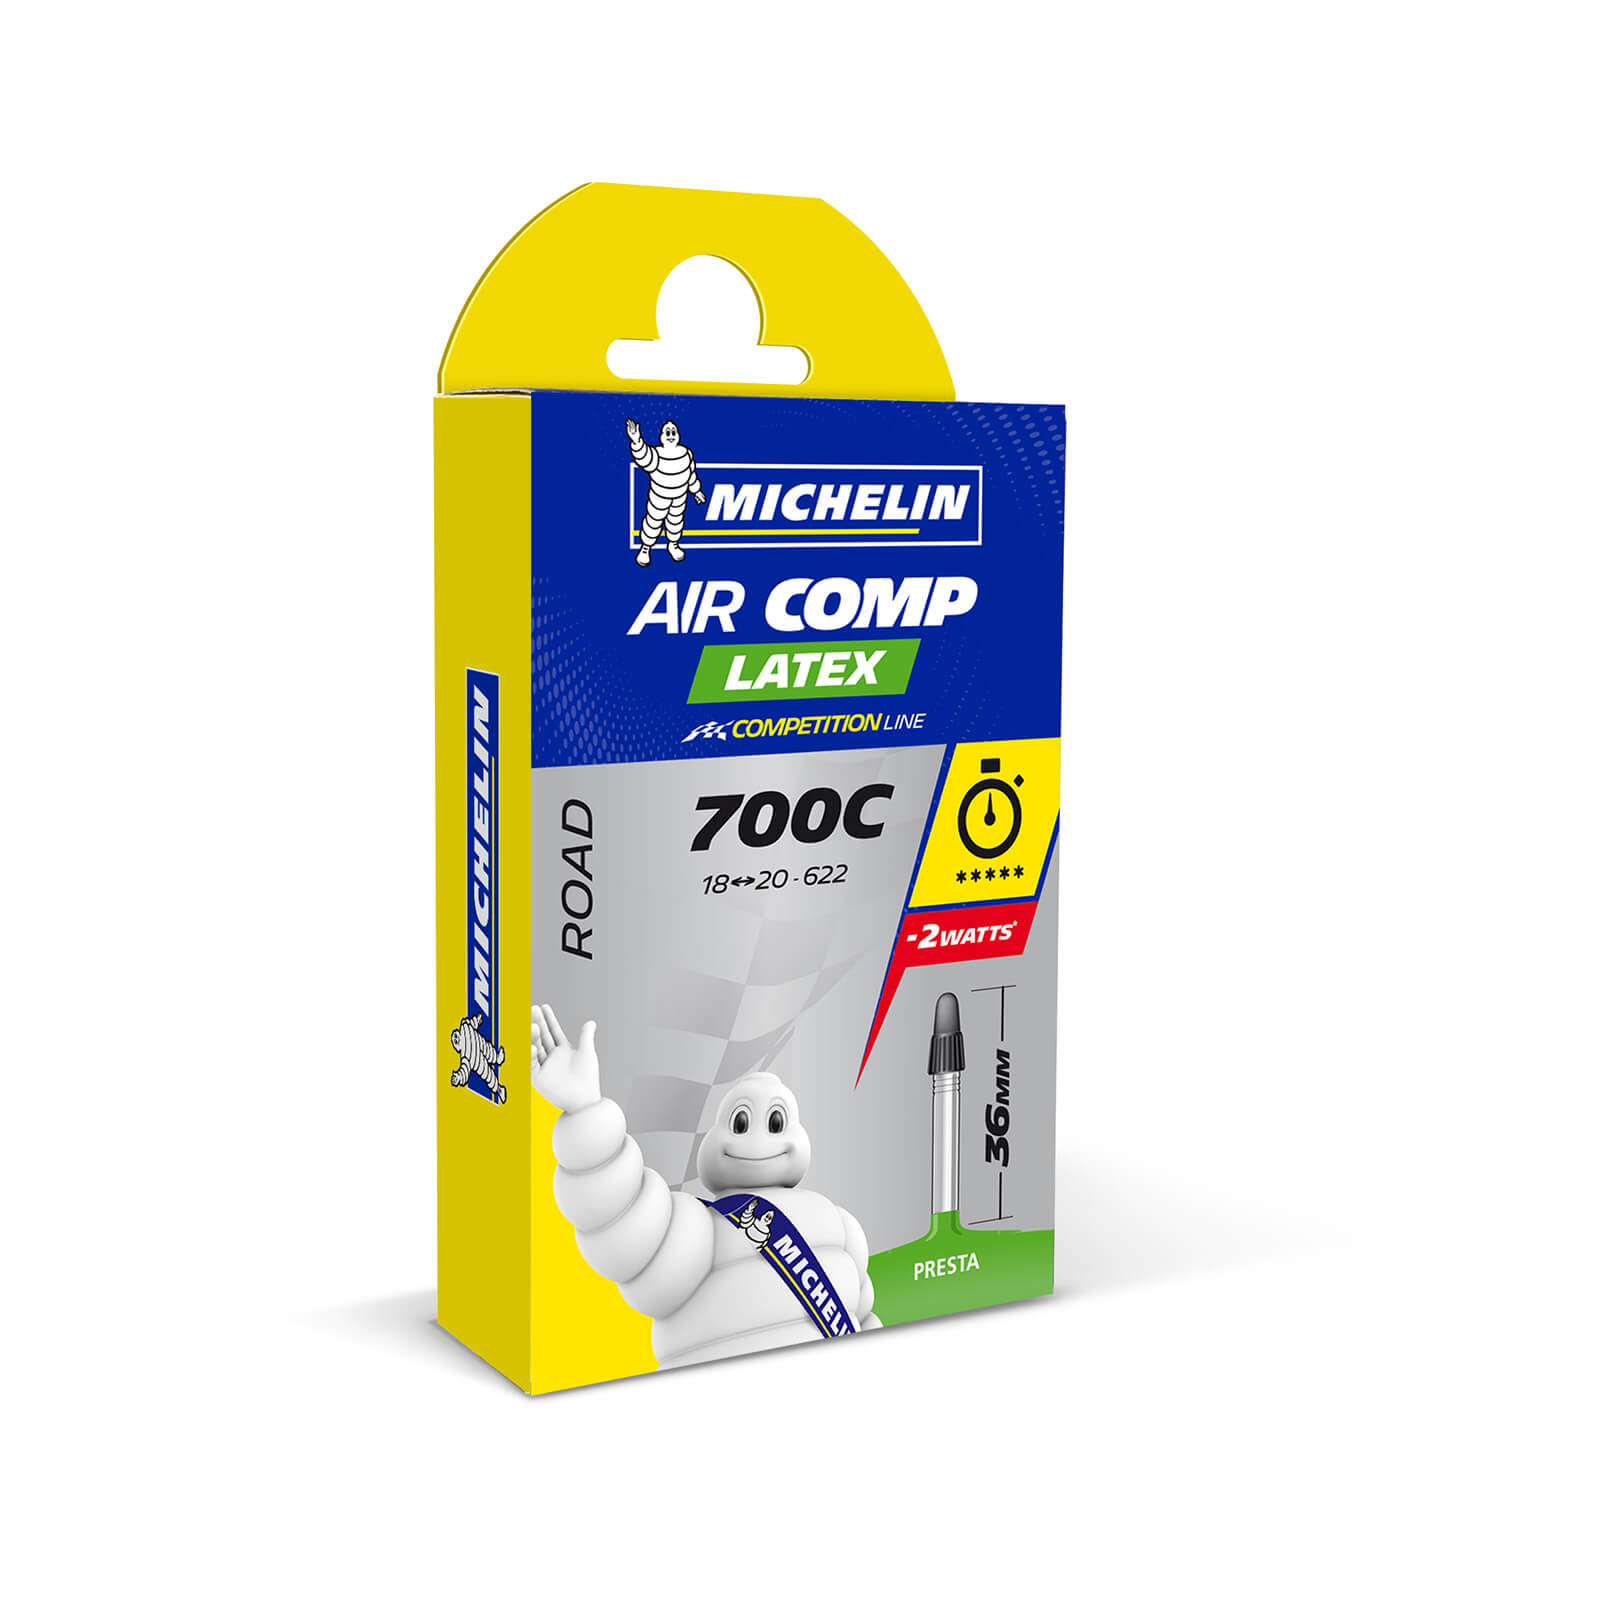 Michelin A1 Aircomp Latex Road Inner Tube - 700c x 22-23mm - Presta 60mm